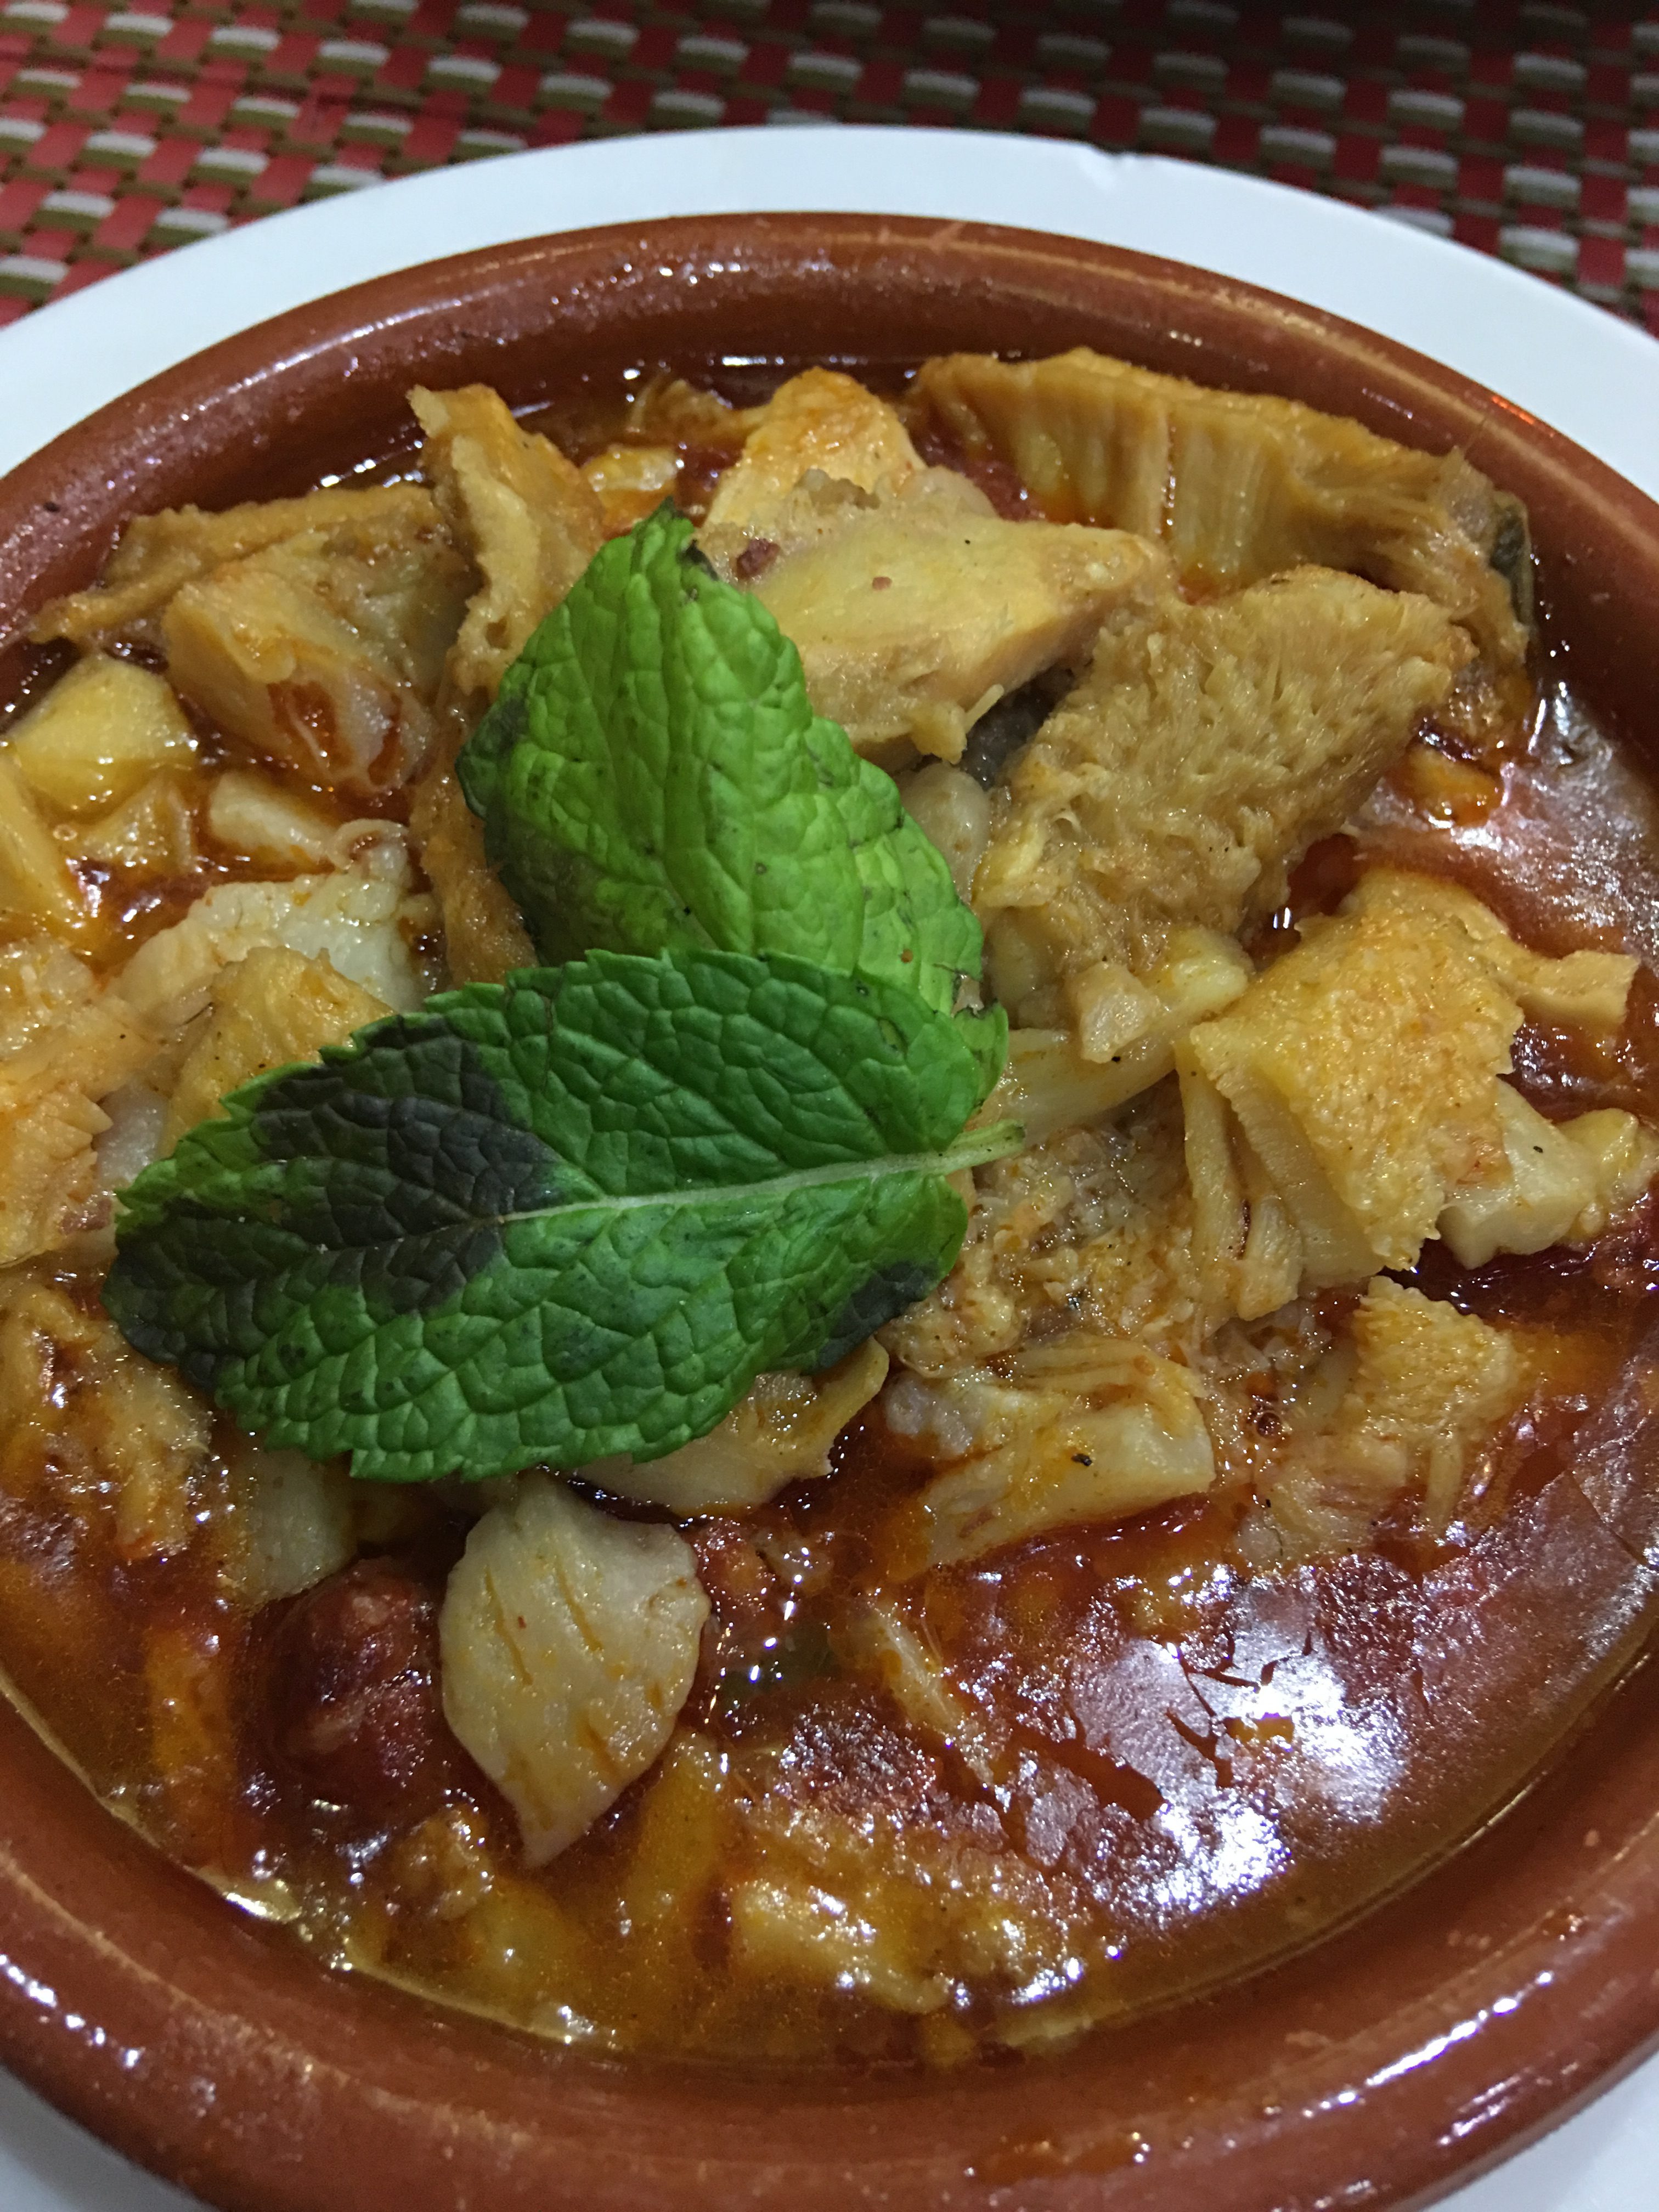 Tripe Stew at Bodeguita Romero in Seville